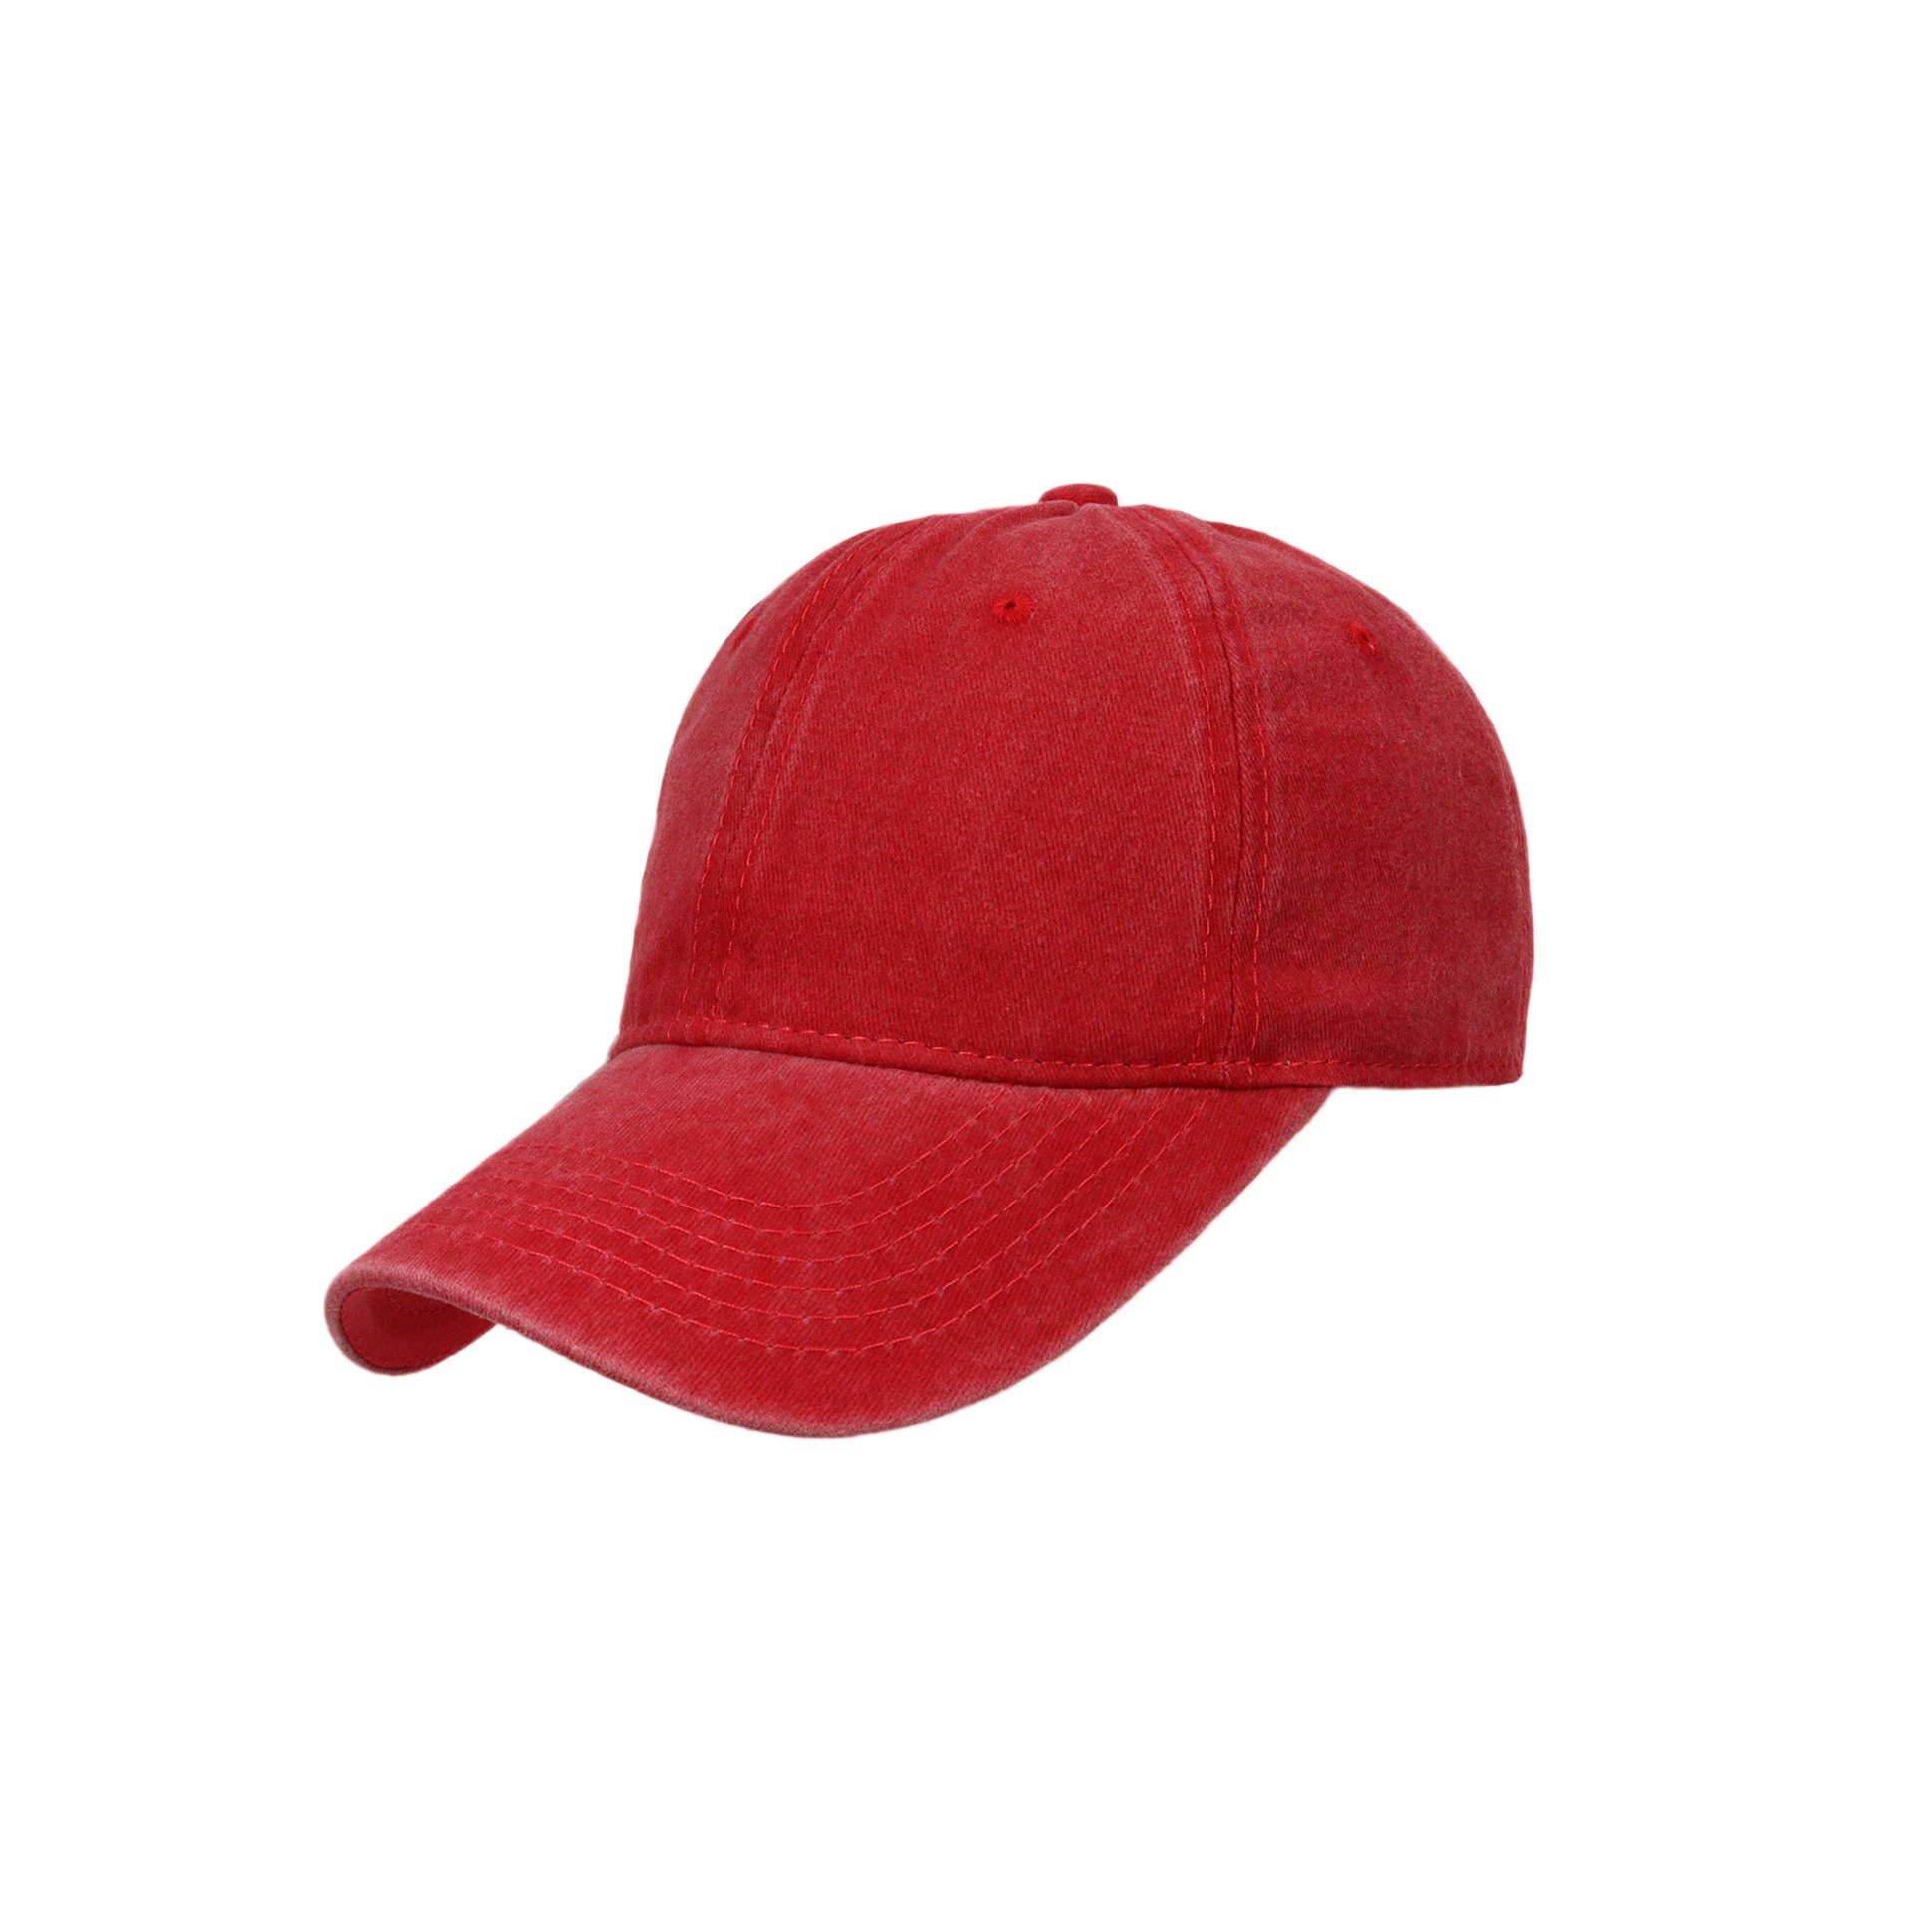 ZEBRO Baseball Cap Base Cap mit Belüftungslöcher rot